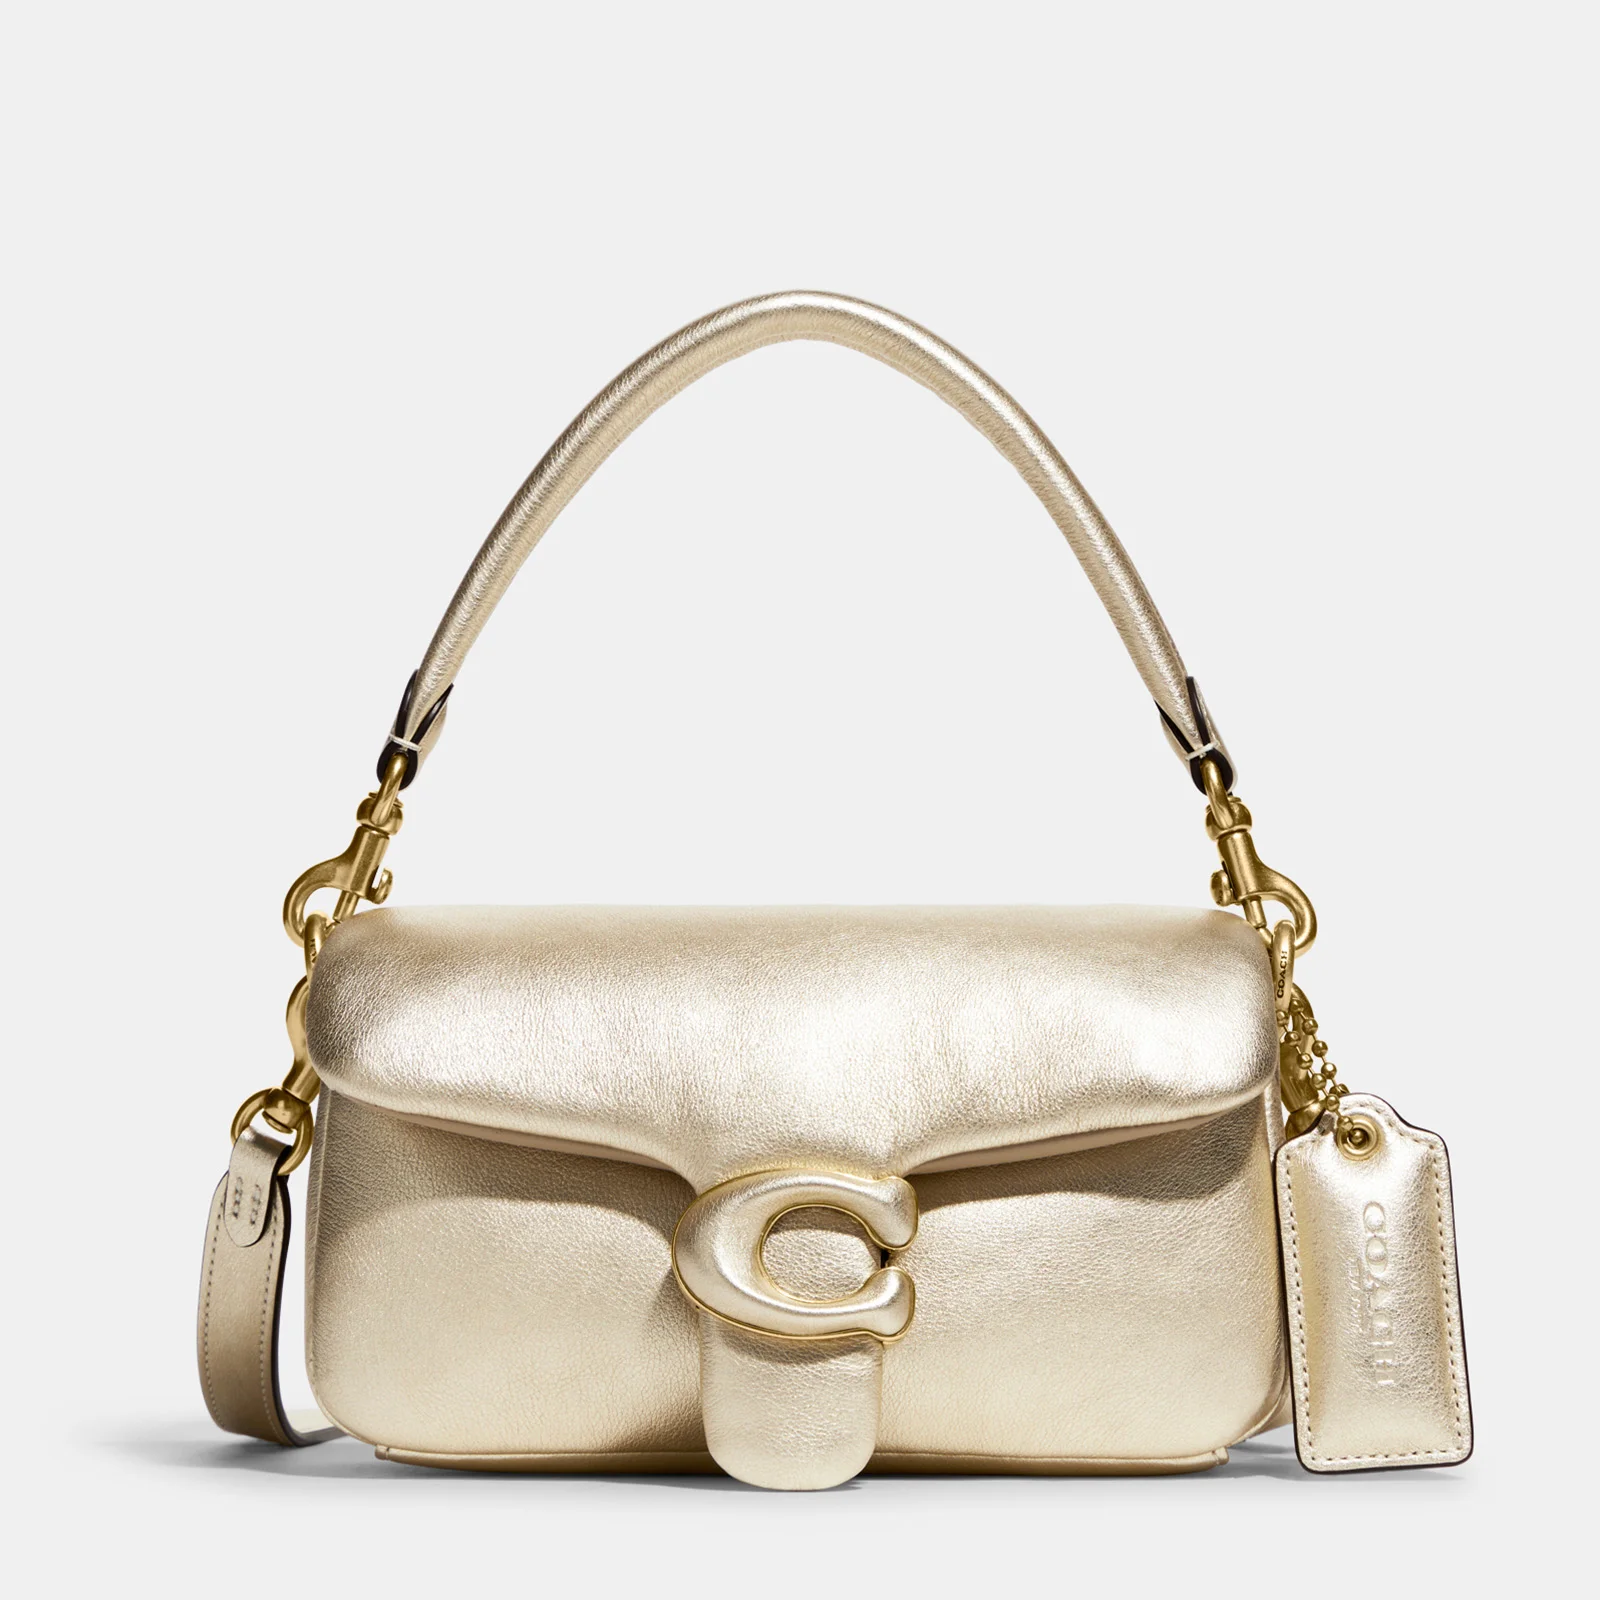 Coach Women's Pillow Tabby Bag 18 - Metallic Soft Gold Image 1